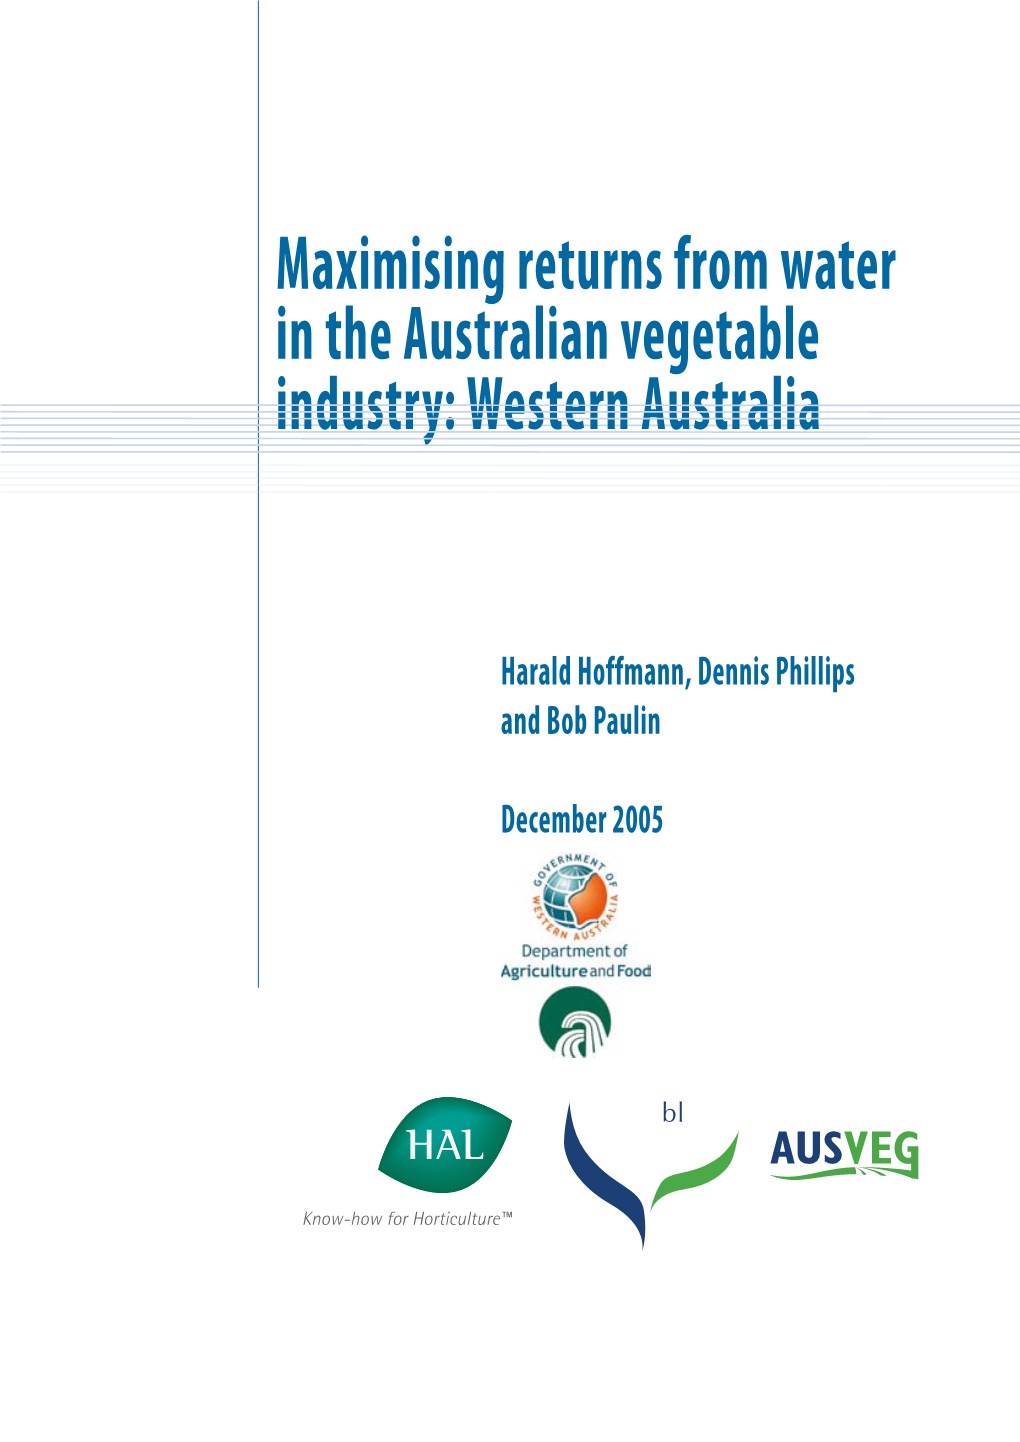 Maximising Returns from Water in the Australian Vegetable Industry: Western Australia